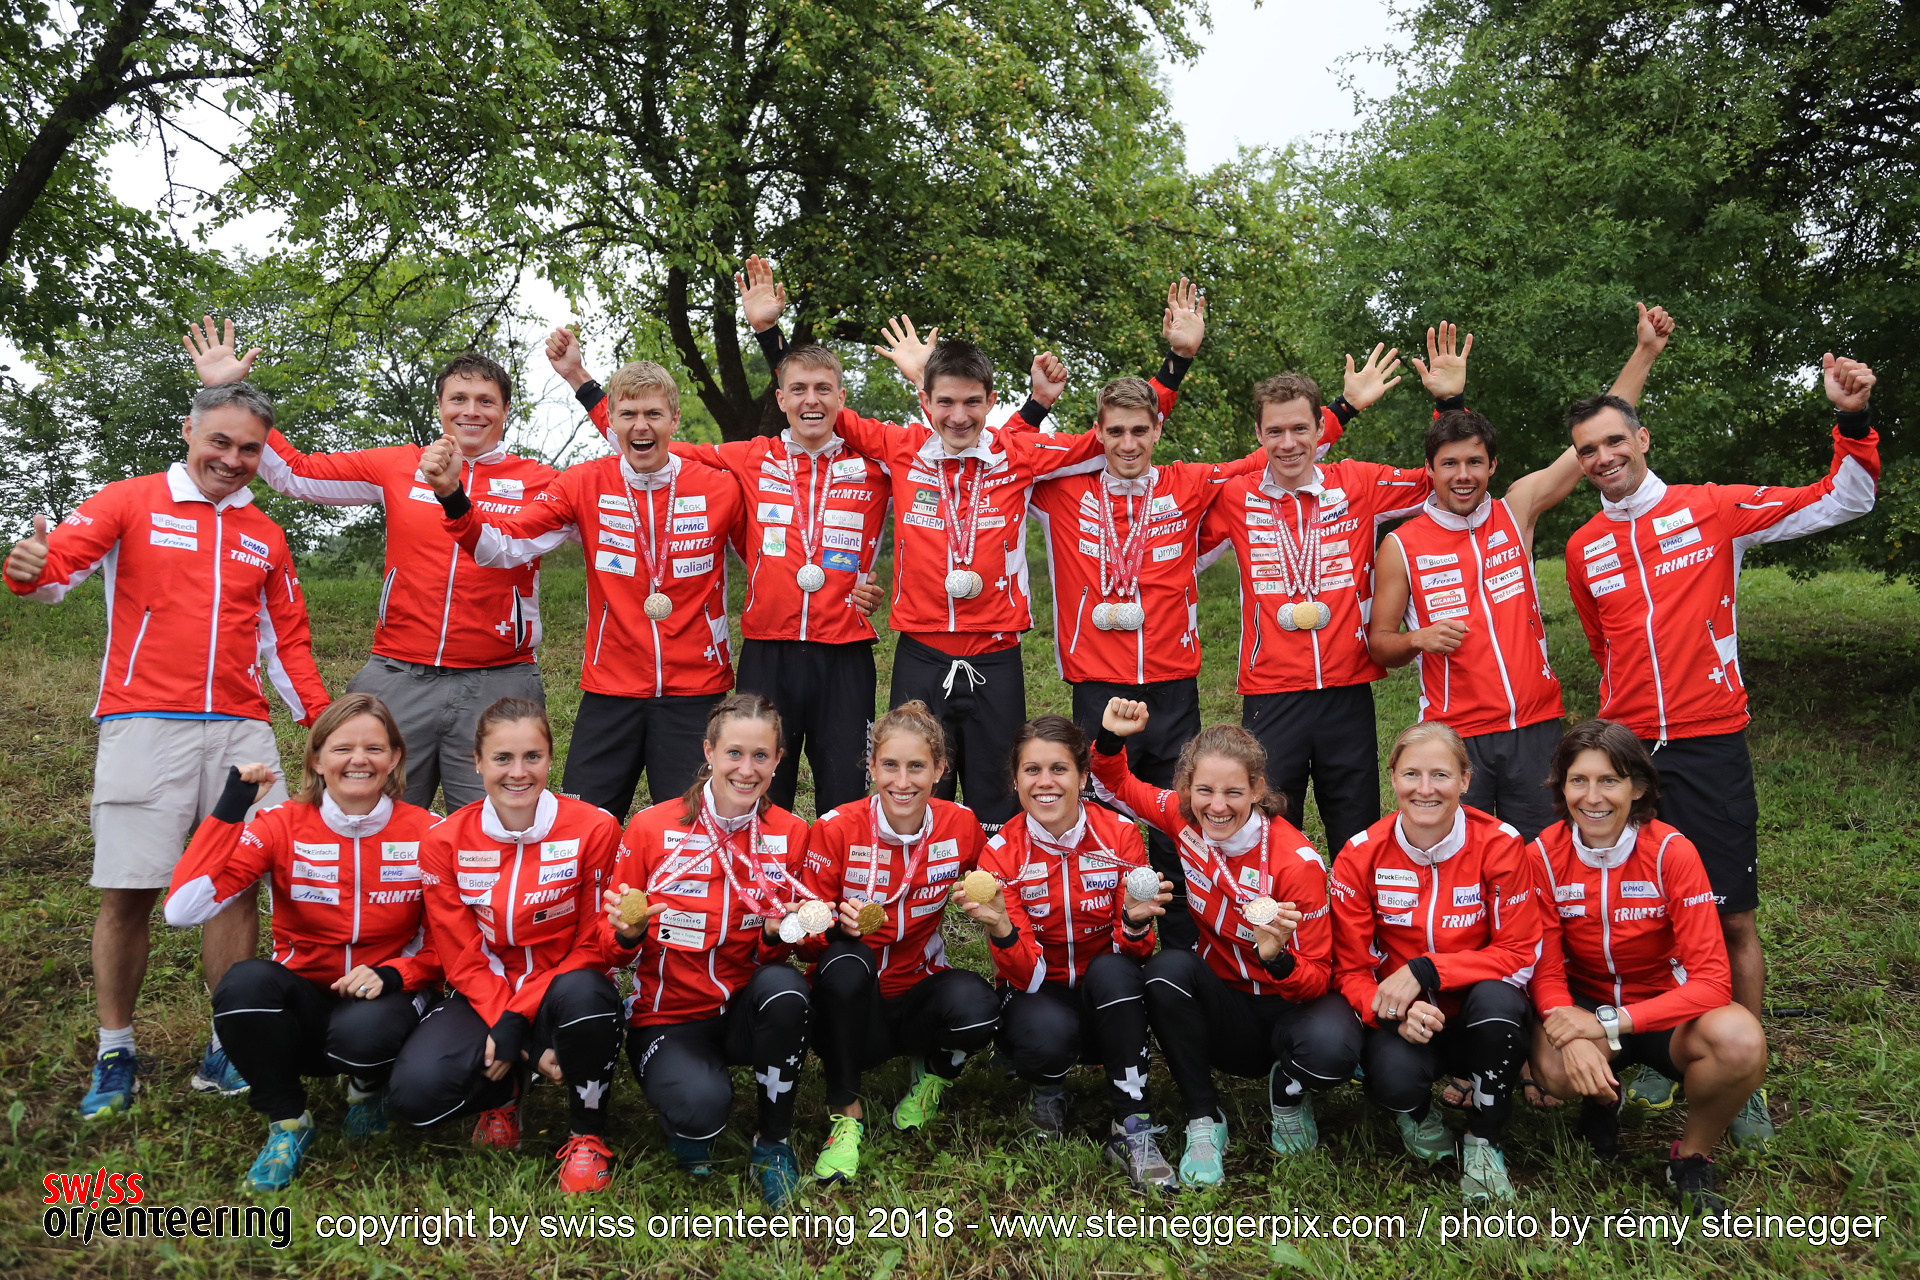 The Swiss Orienteering Team at WOC 2018 Latvia